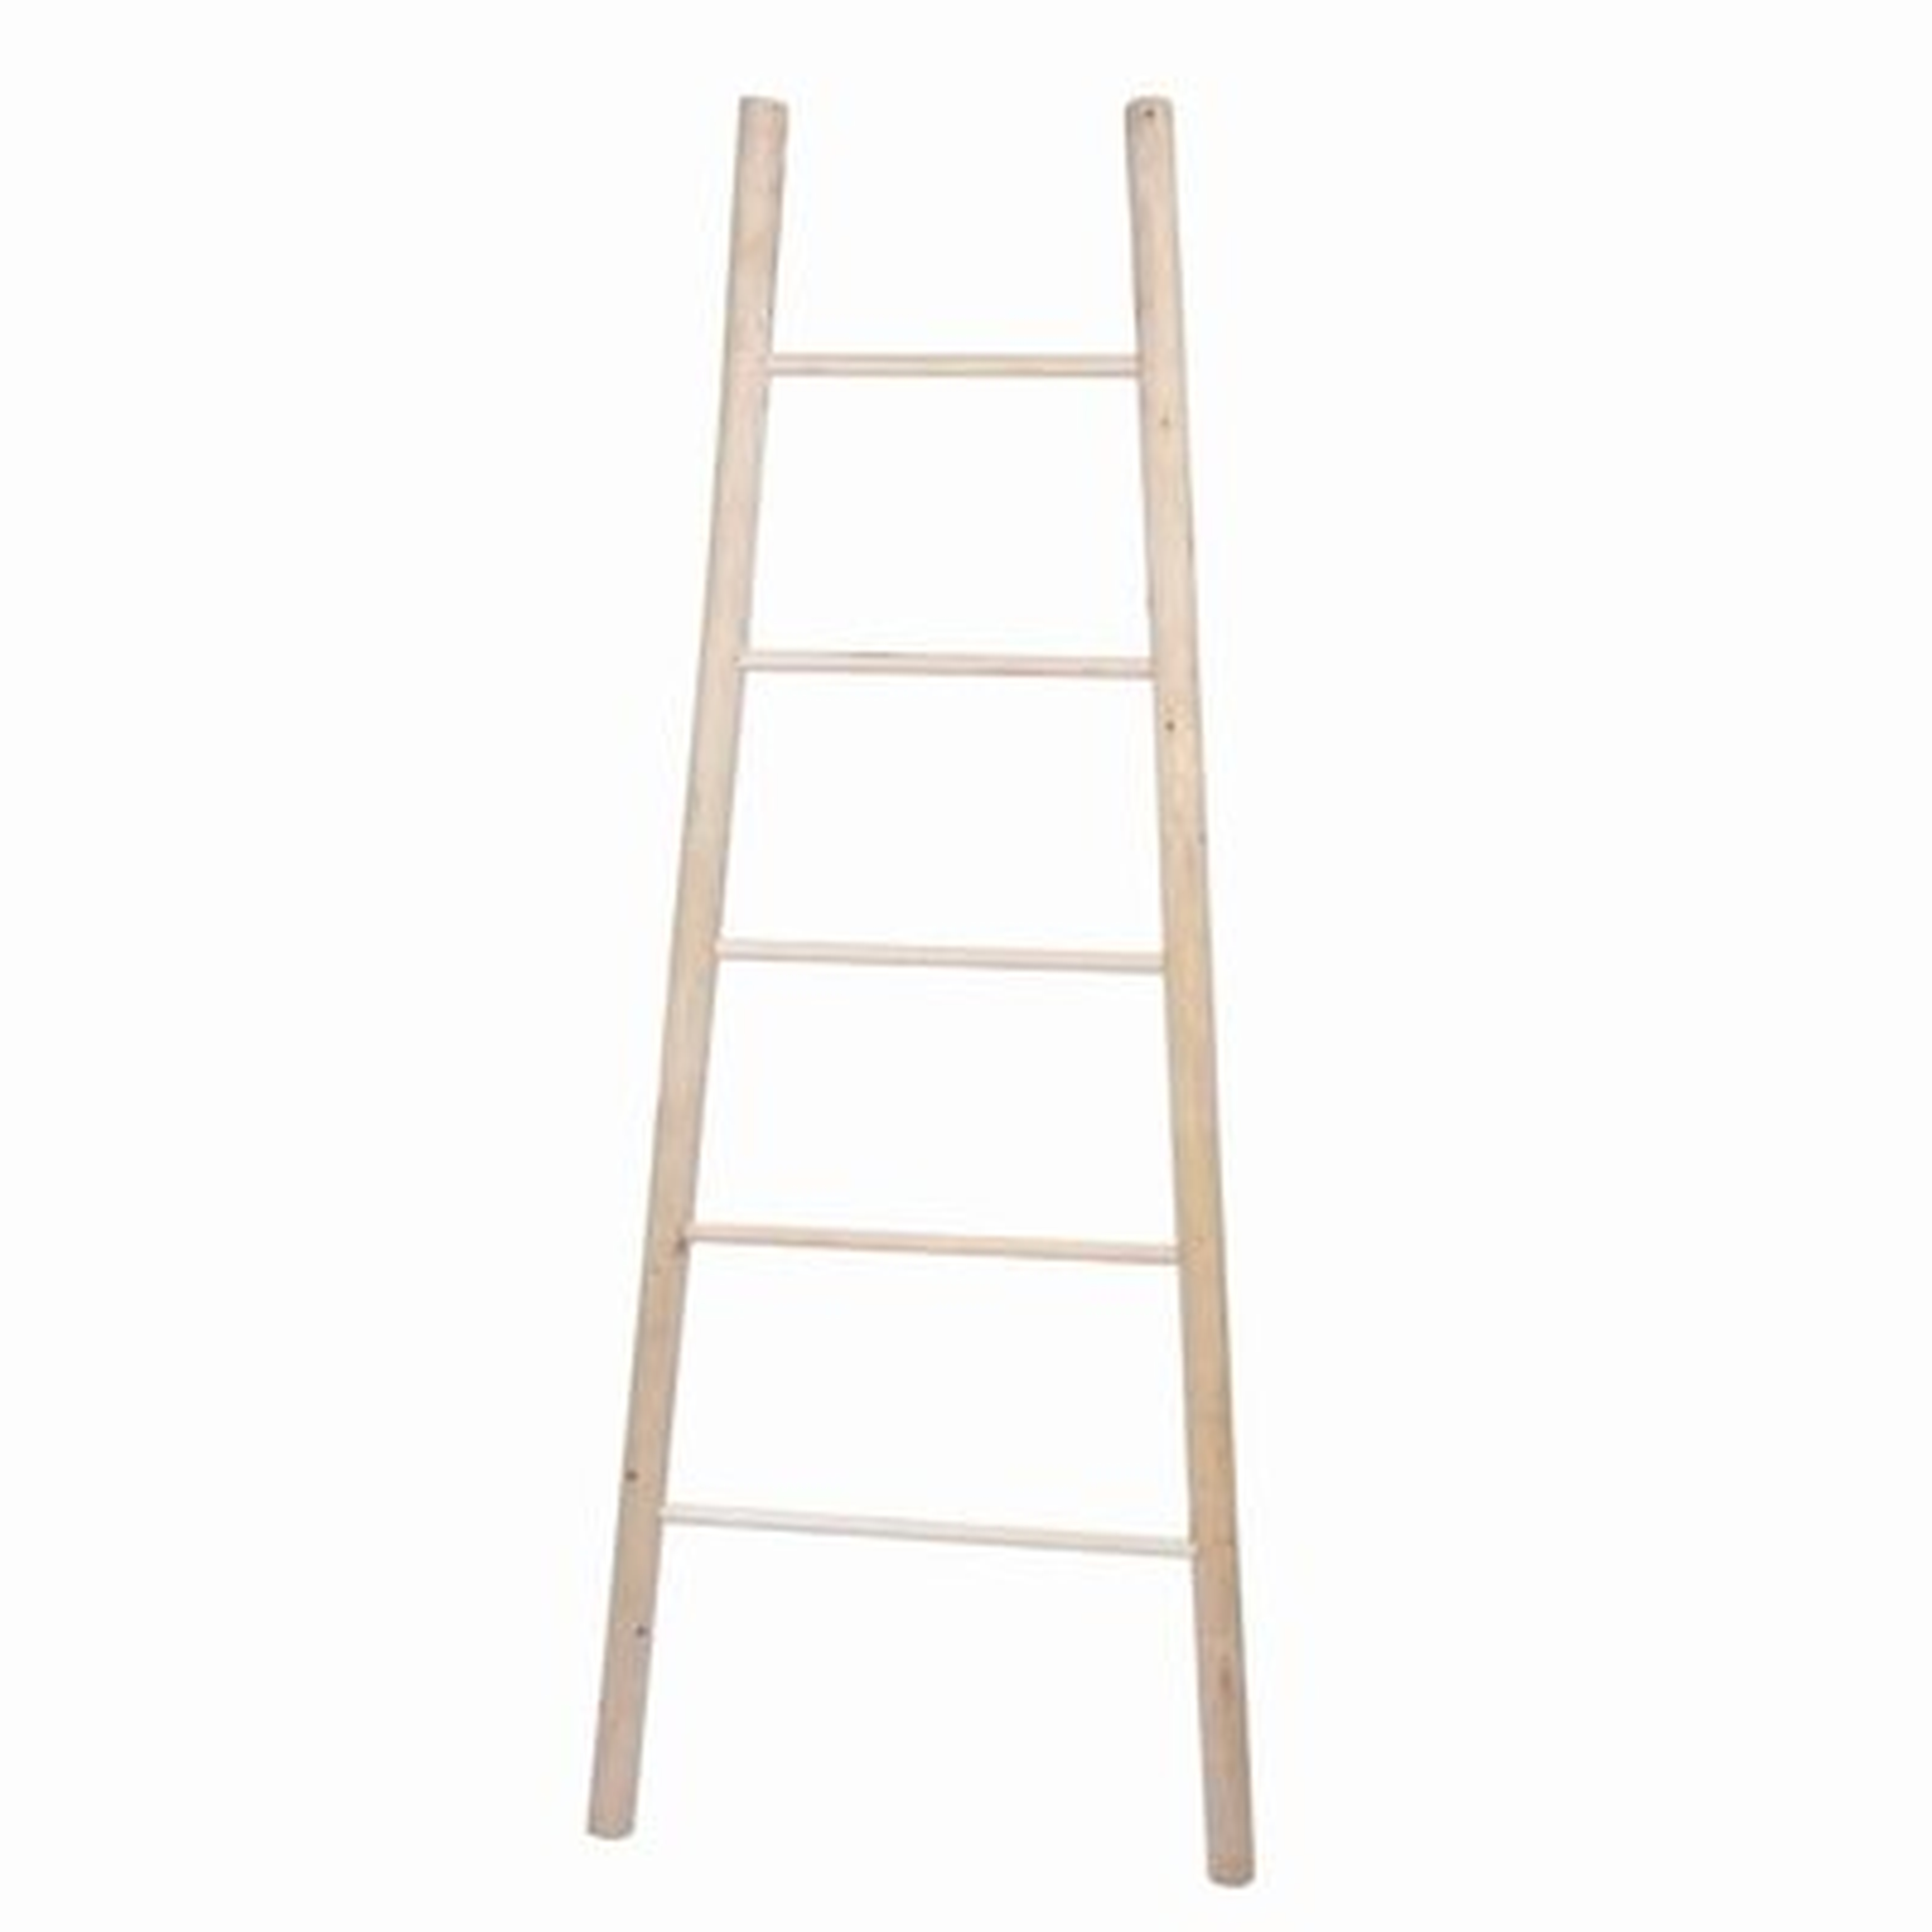 Dorcas Decorative Wooden Ladder with 5 Slats - Wayfair